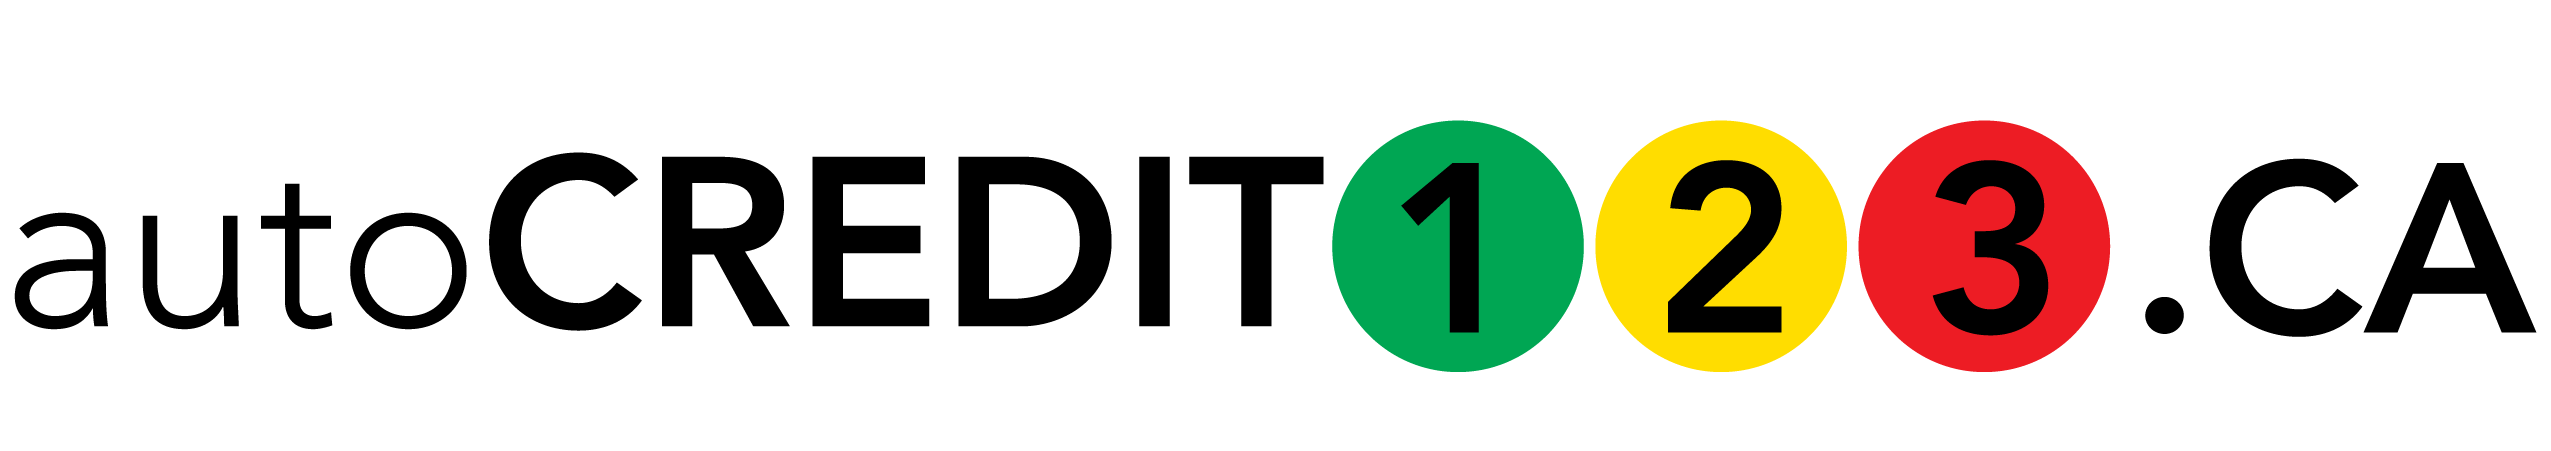 Logo_credit-auto-123.png